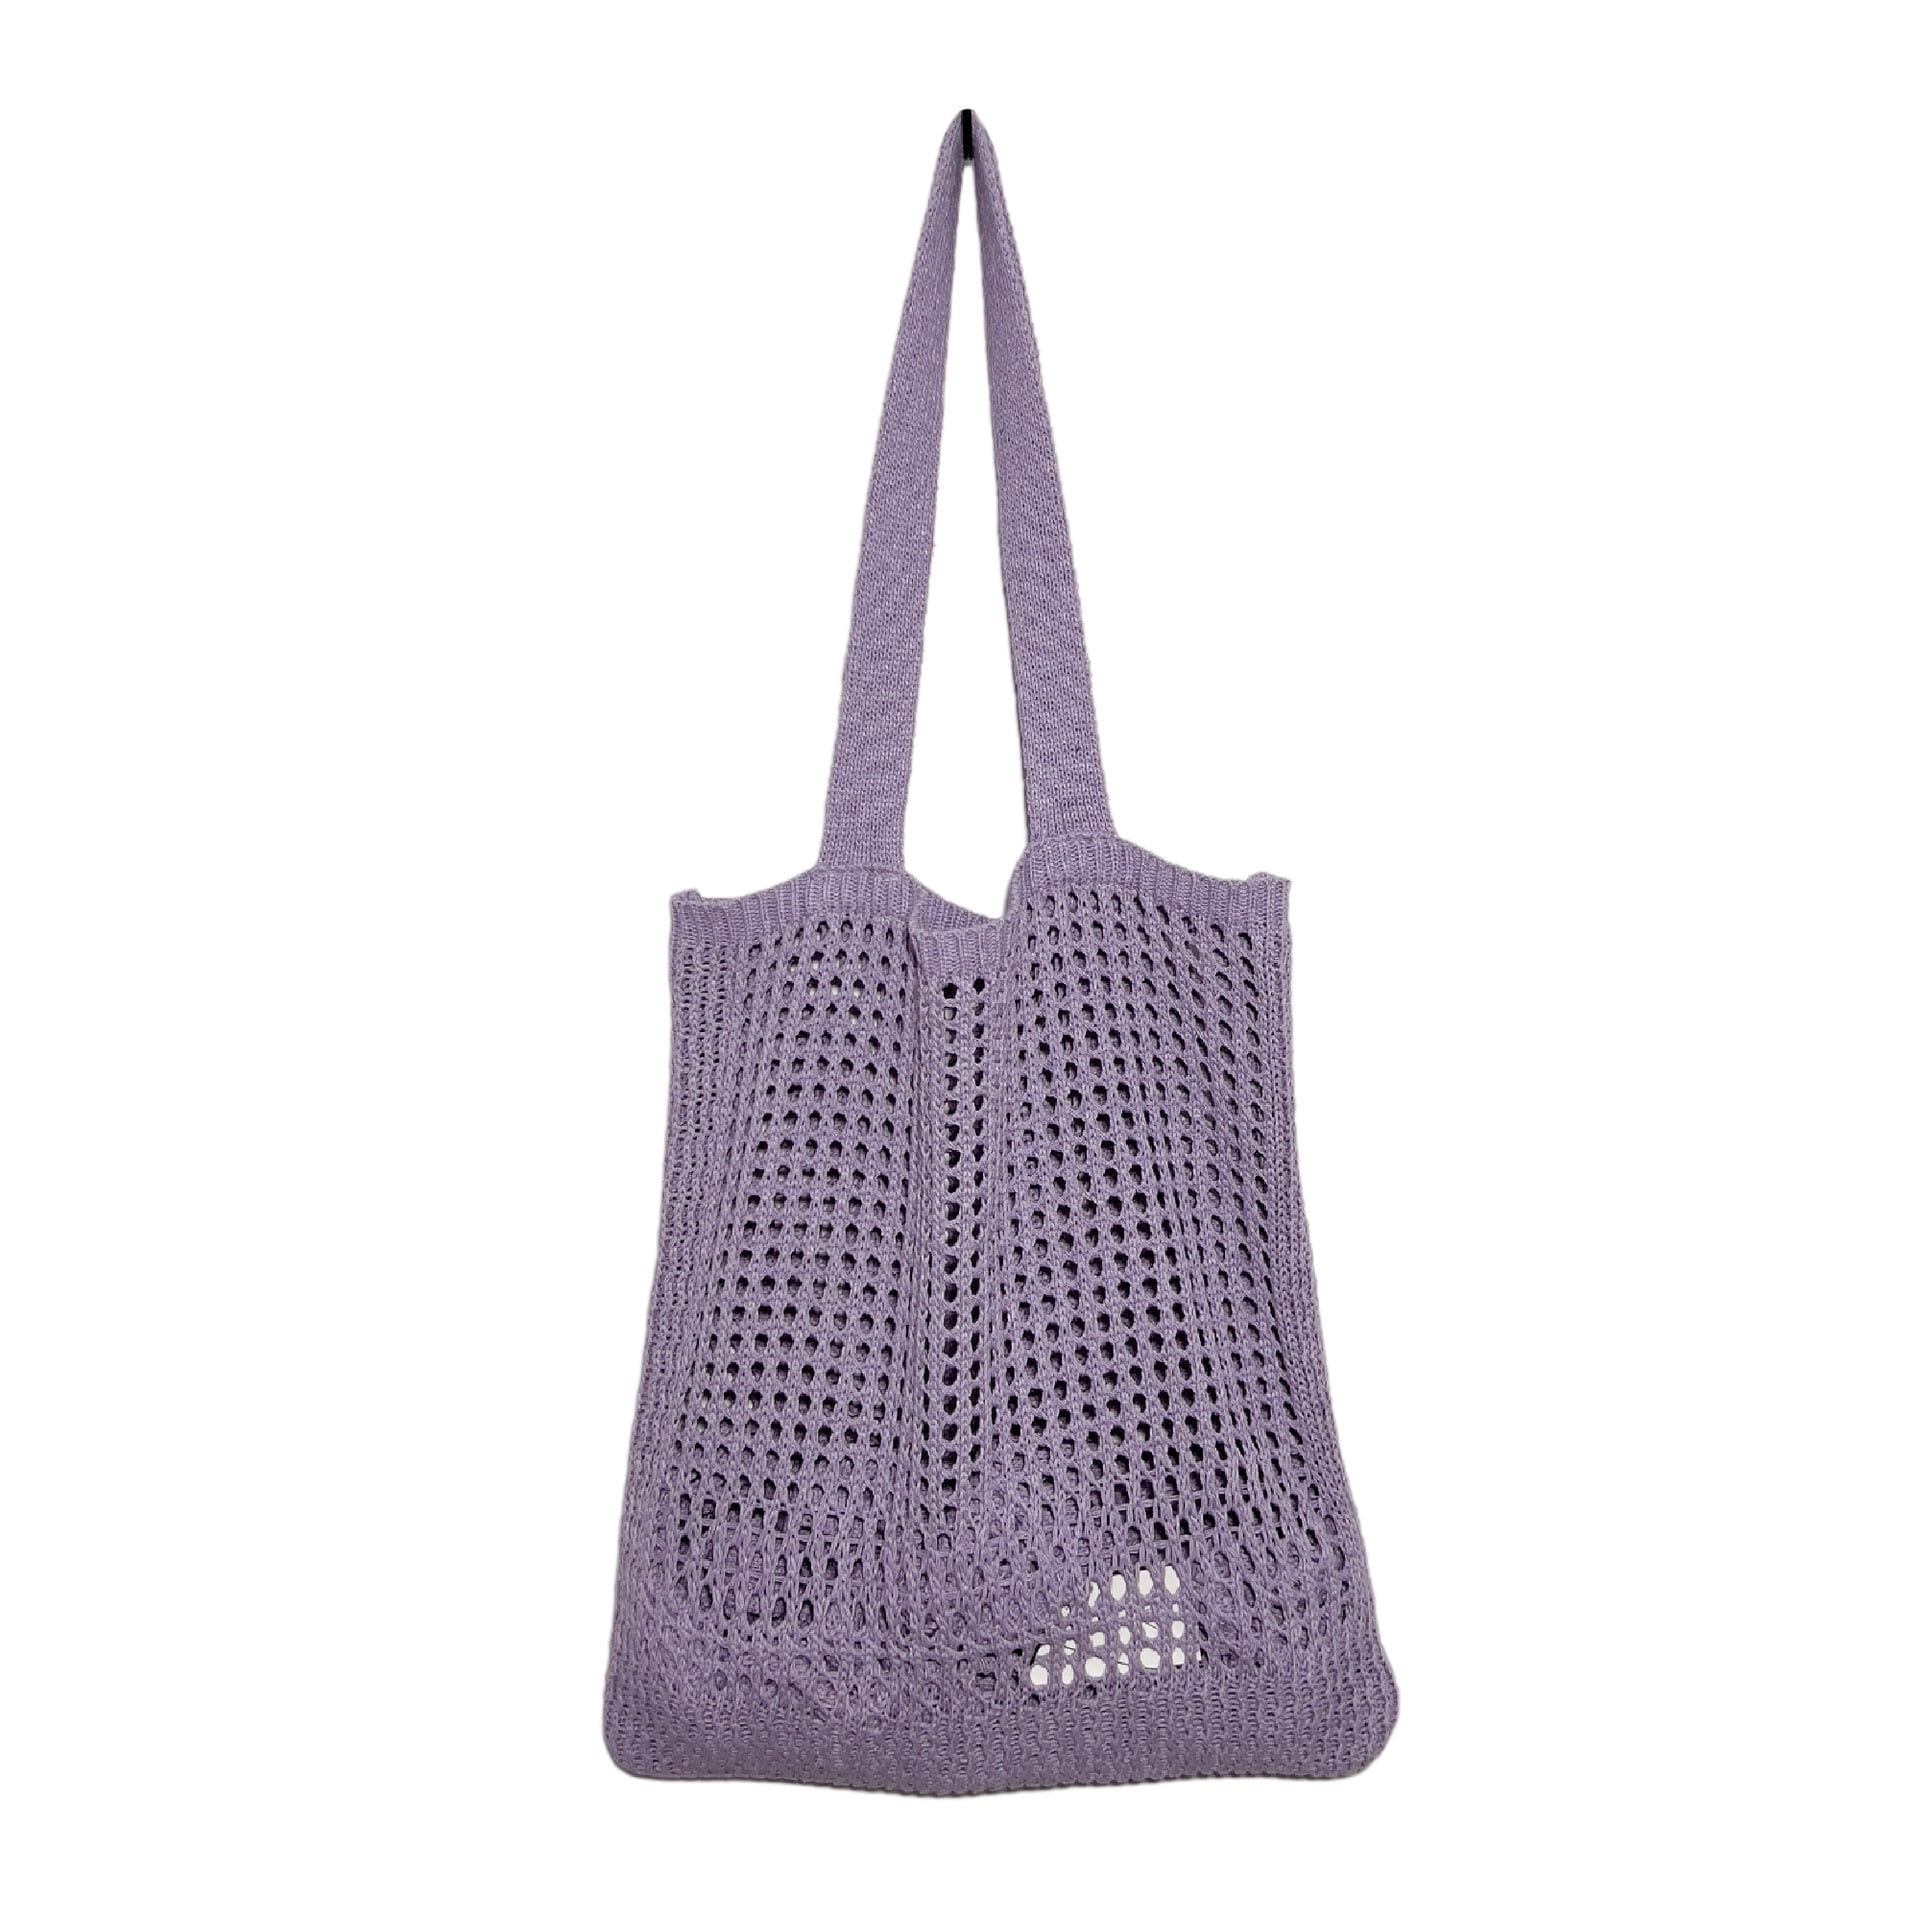 Crochet Bags For Women Hand-Woven Knit Bag With Lining Girls Summer Beach  Mesh Handbag Tote Bag(Orange) 